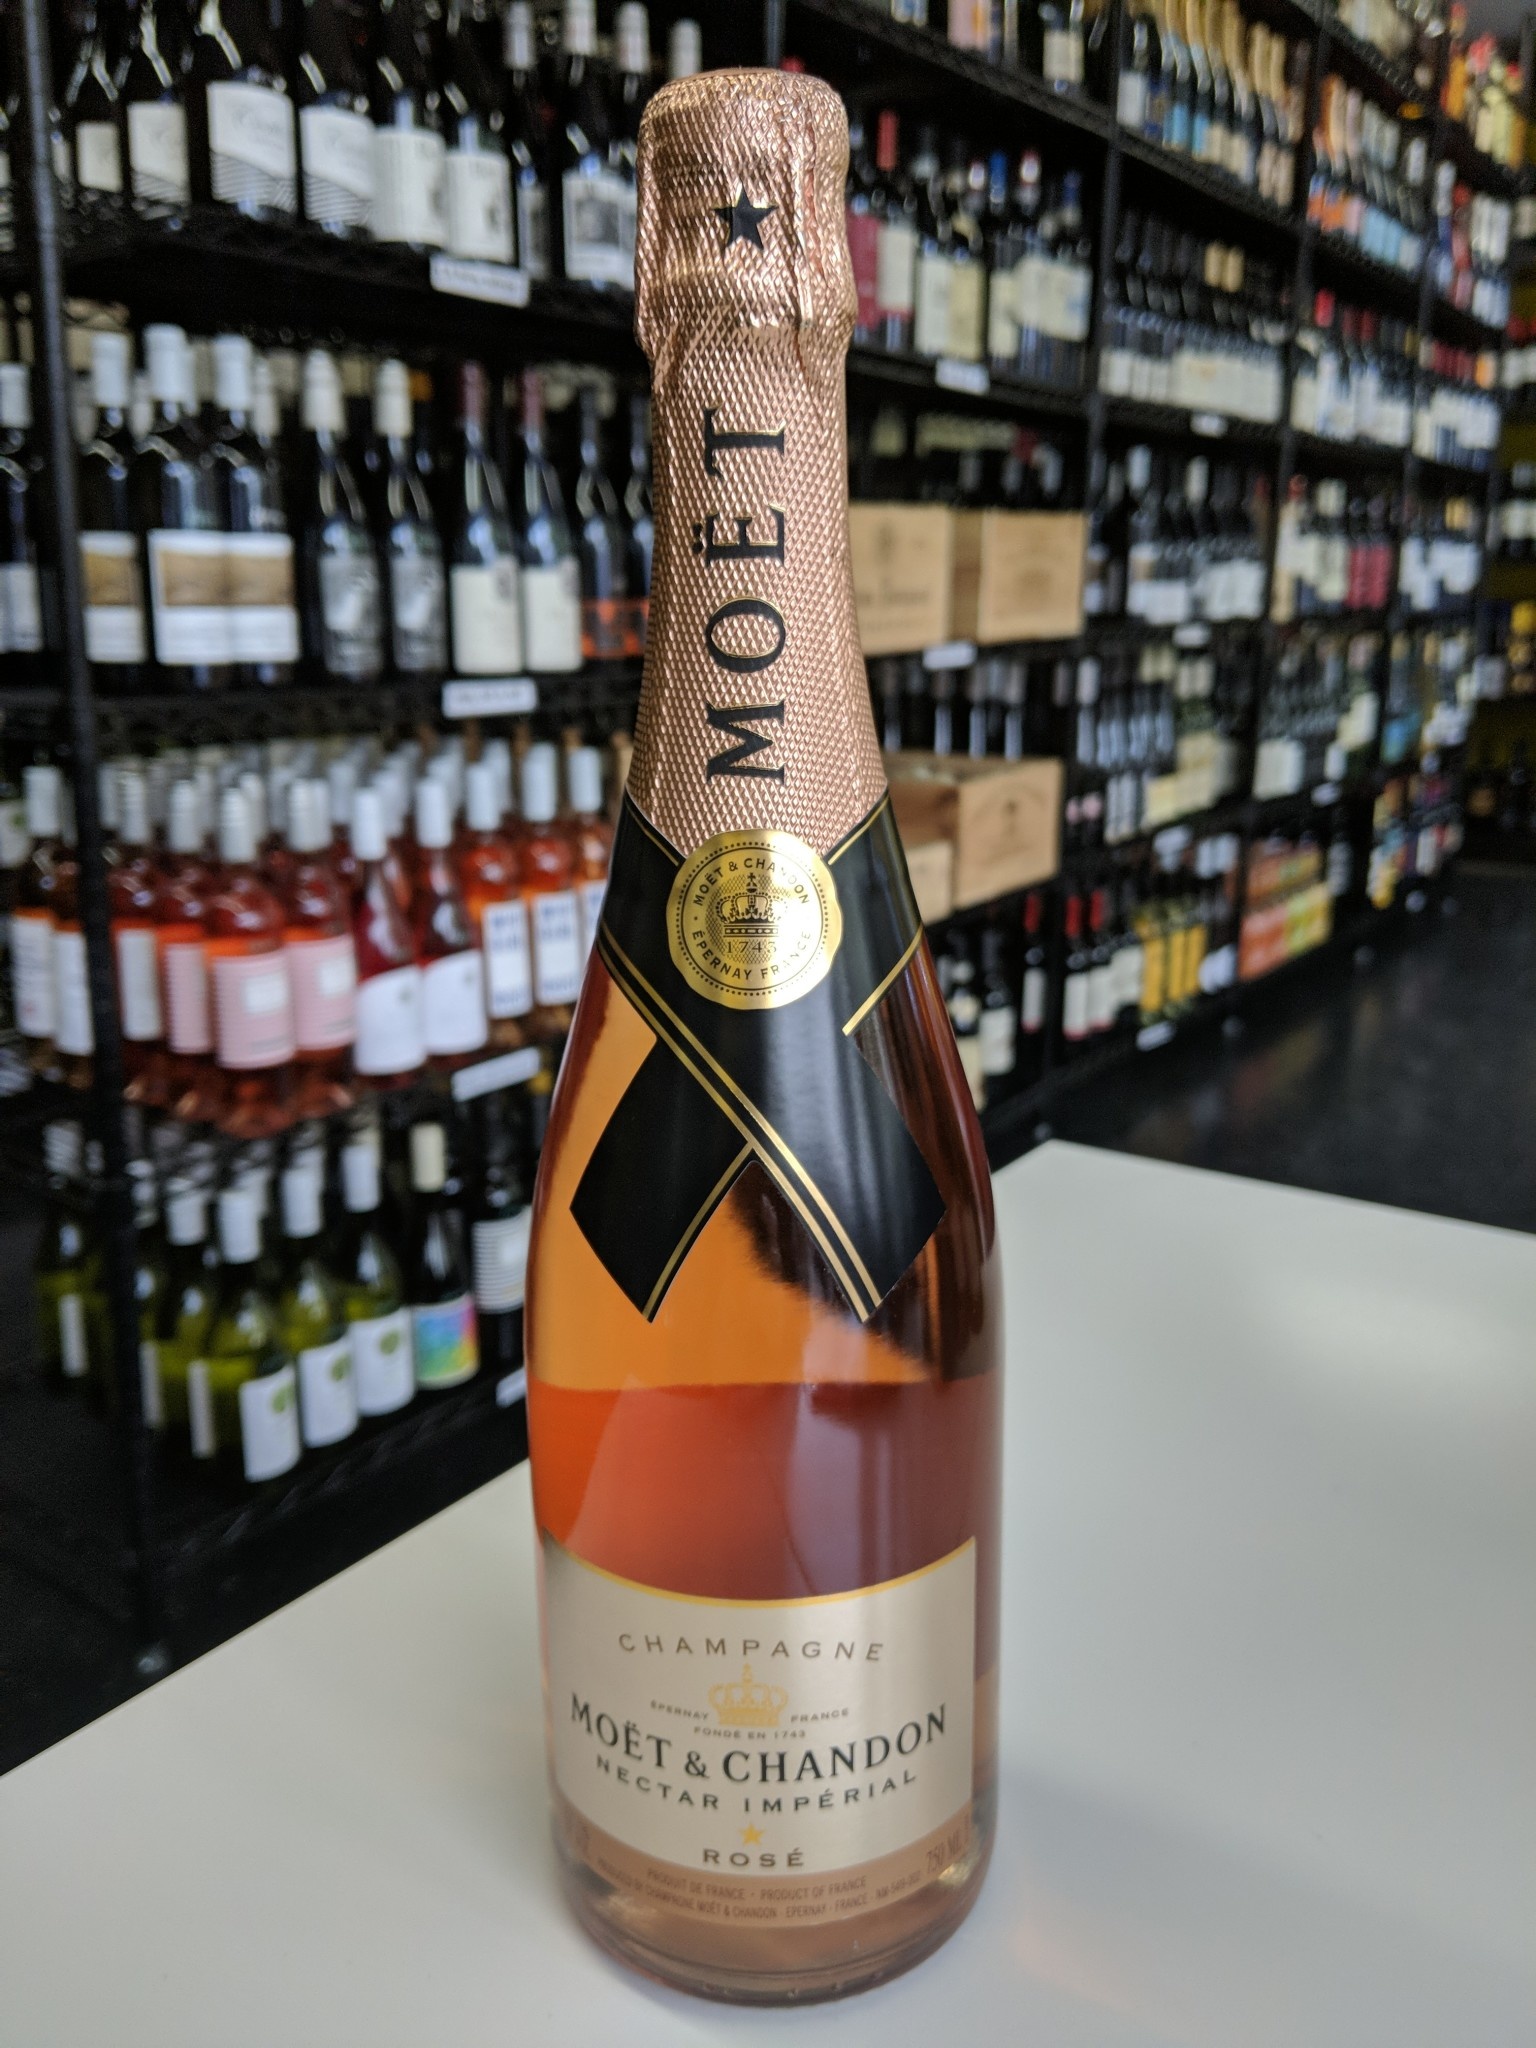 Moet & Chandon Nectar Imperial Rose Champagne NV